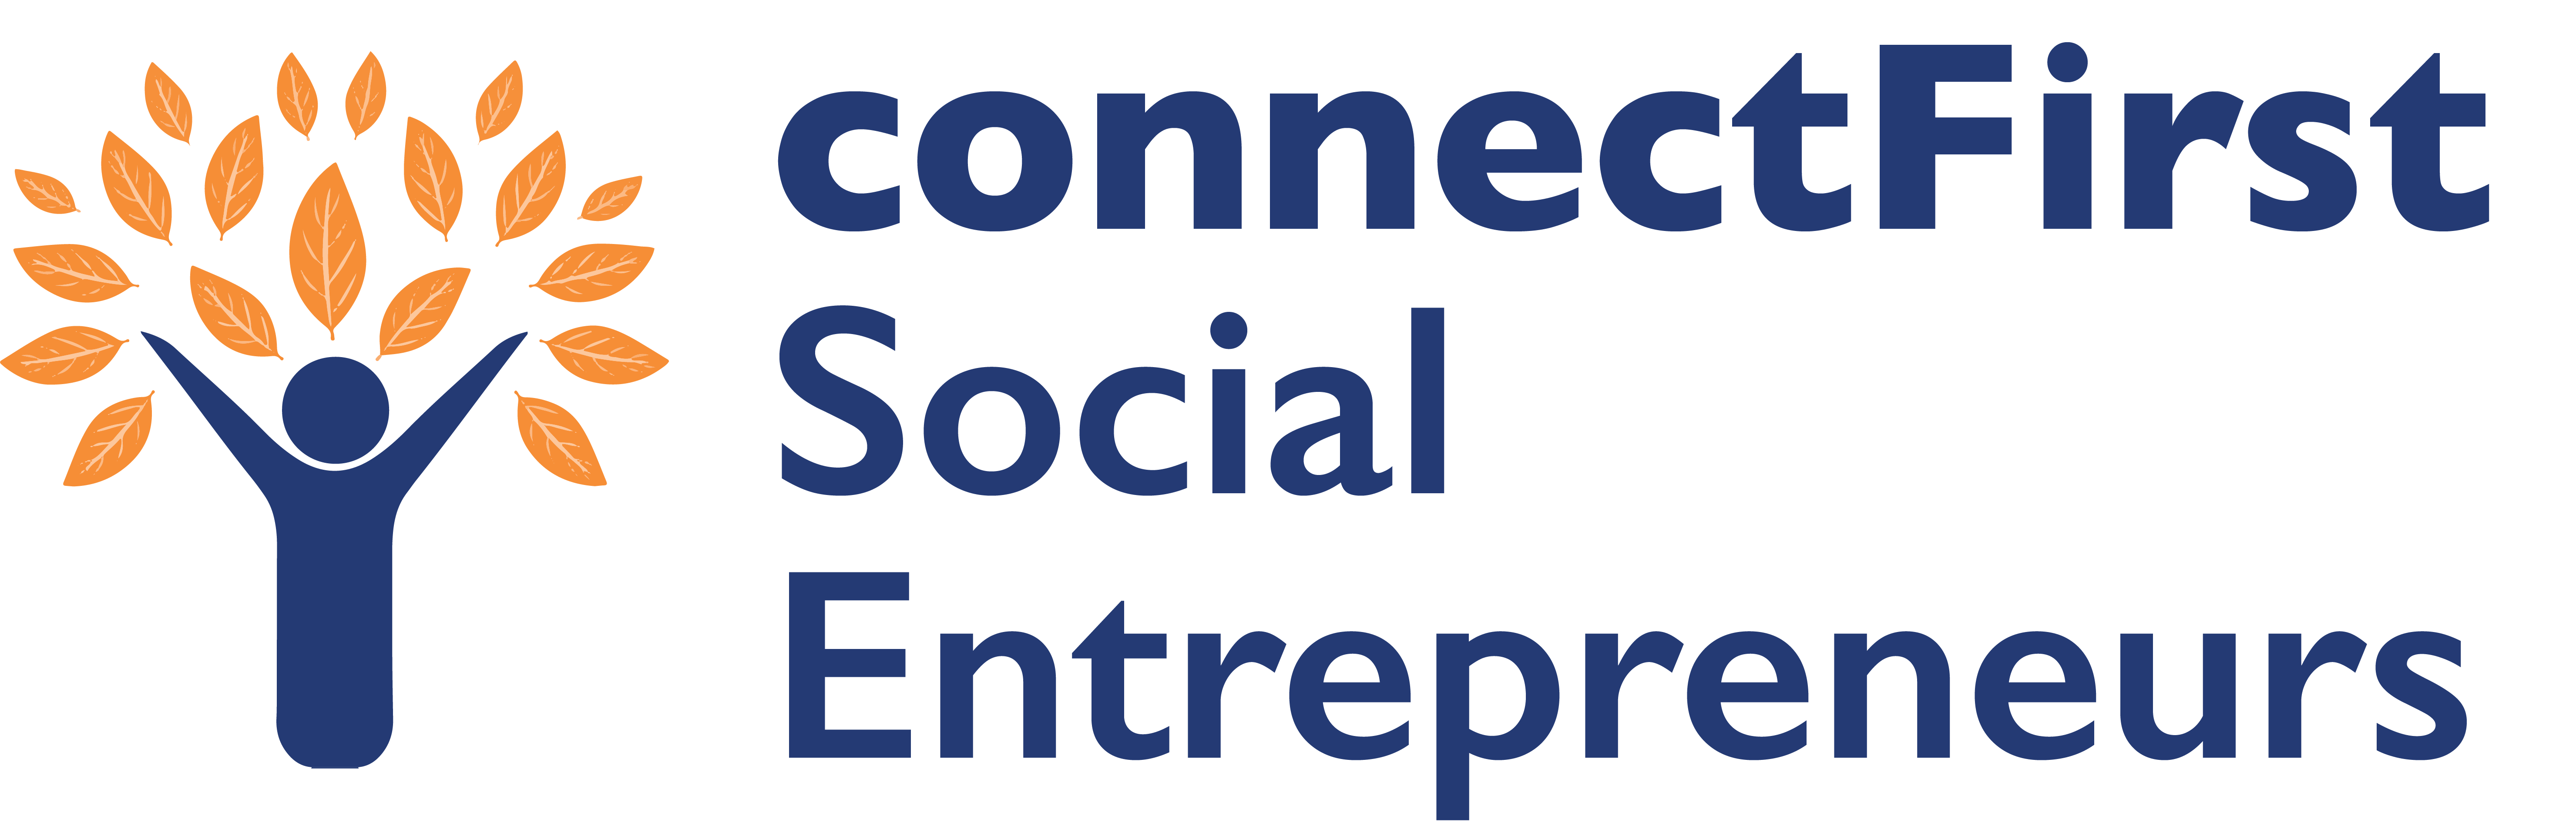 connectFirst-Social-Entrepreneurs-Wordmark.png